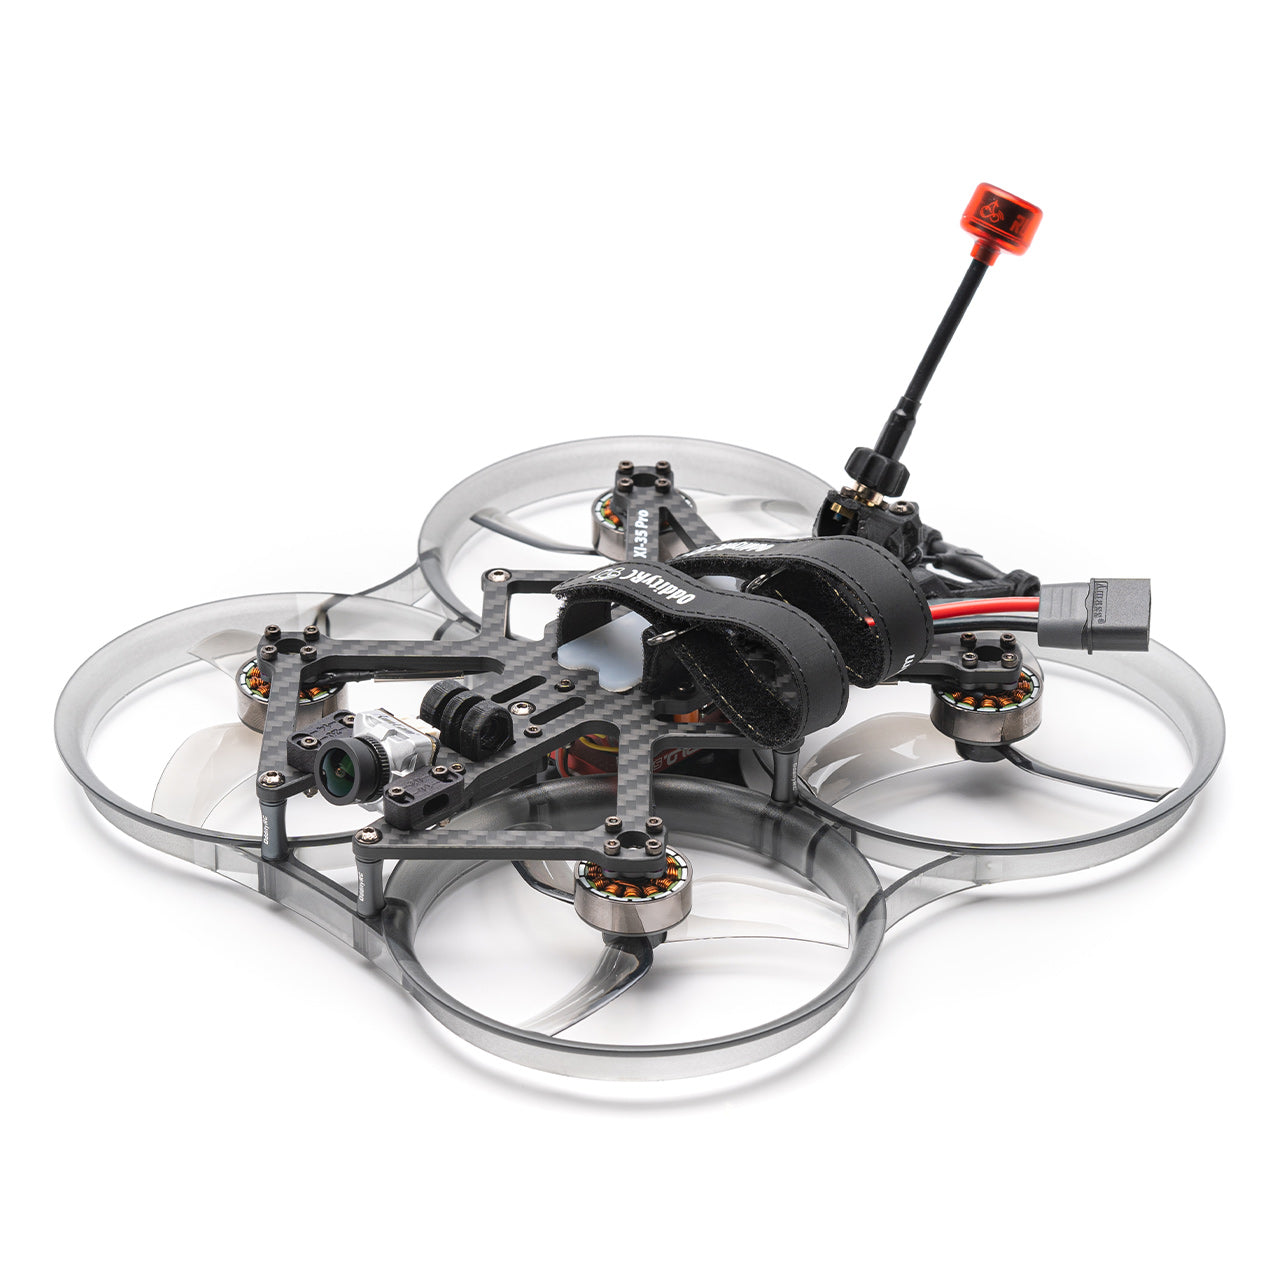 OddityRC XI35Pro Analgo version 3.5 inch cinewhoop FPV drone